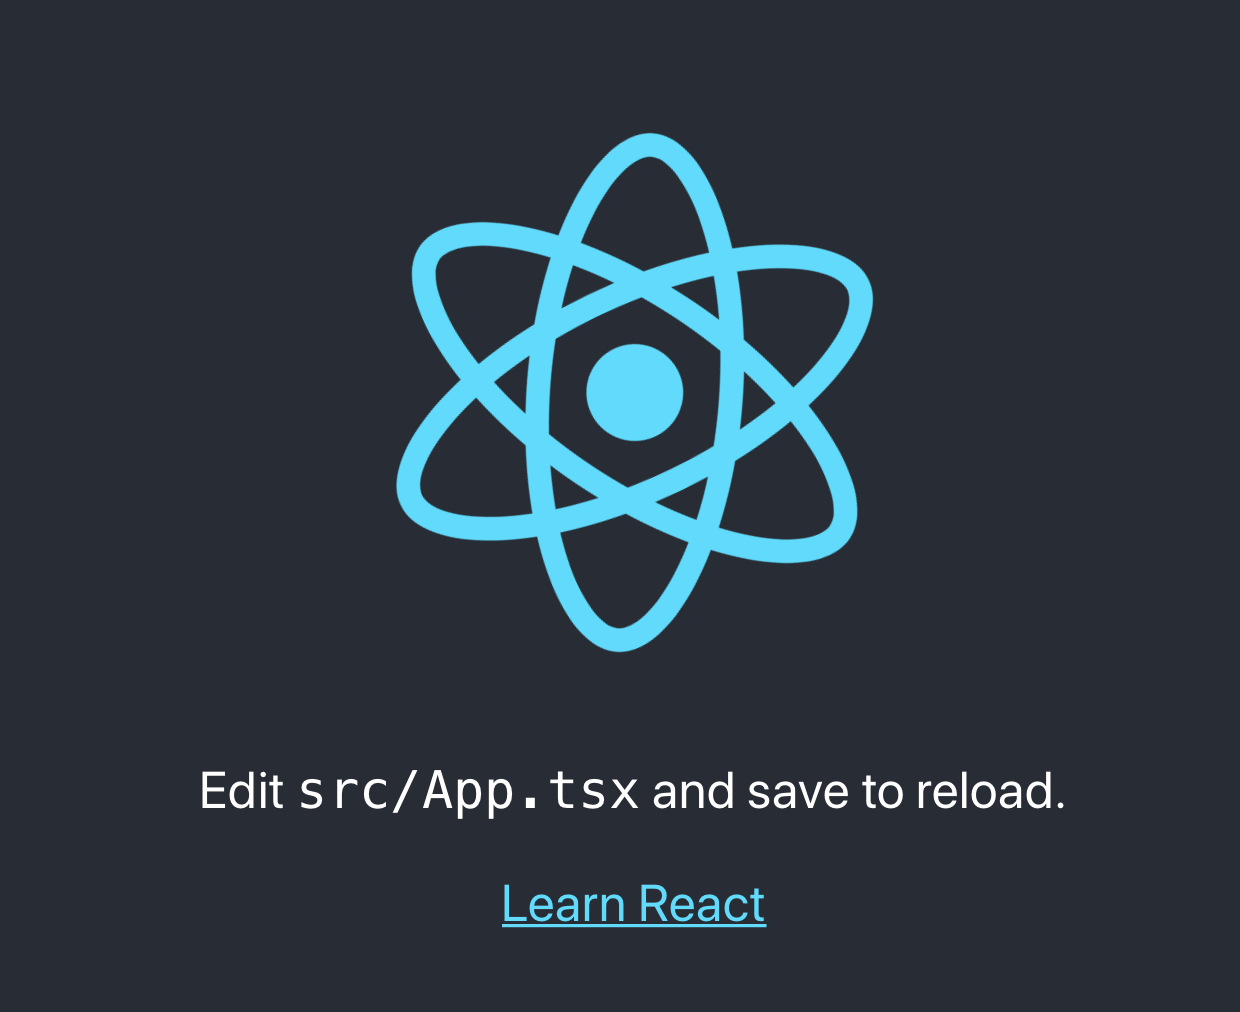 Create React App